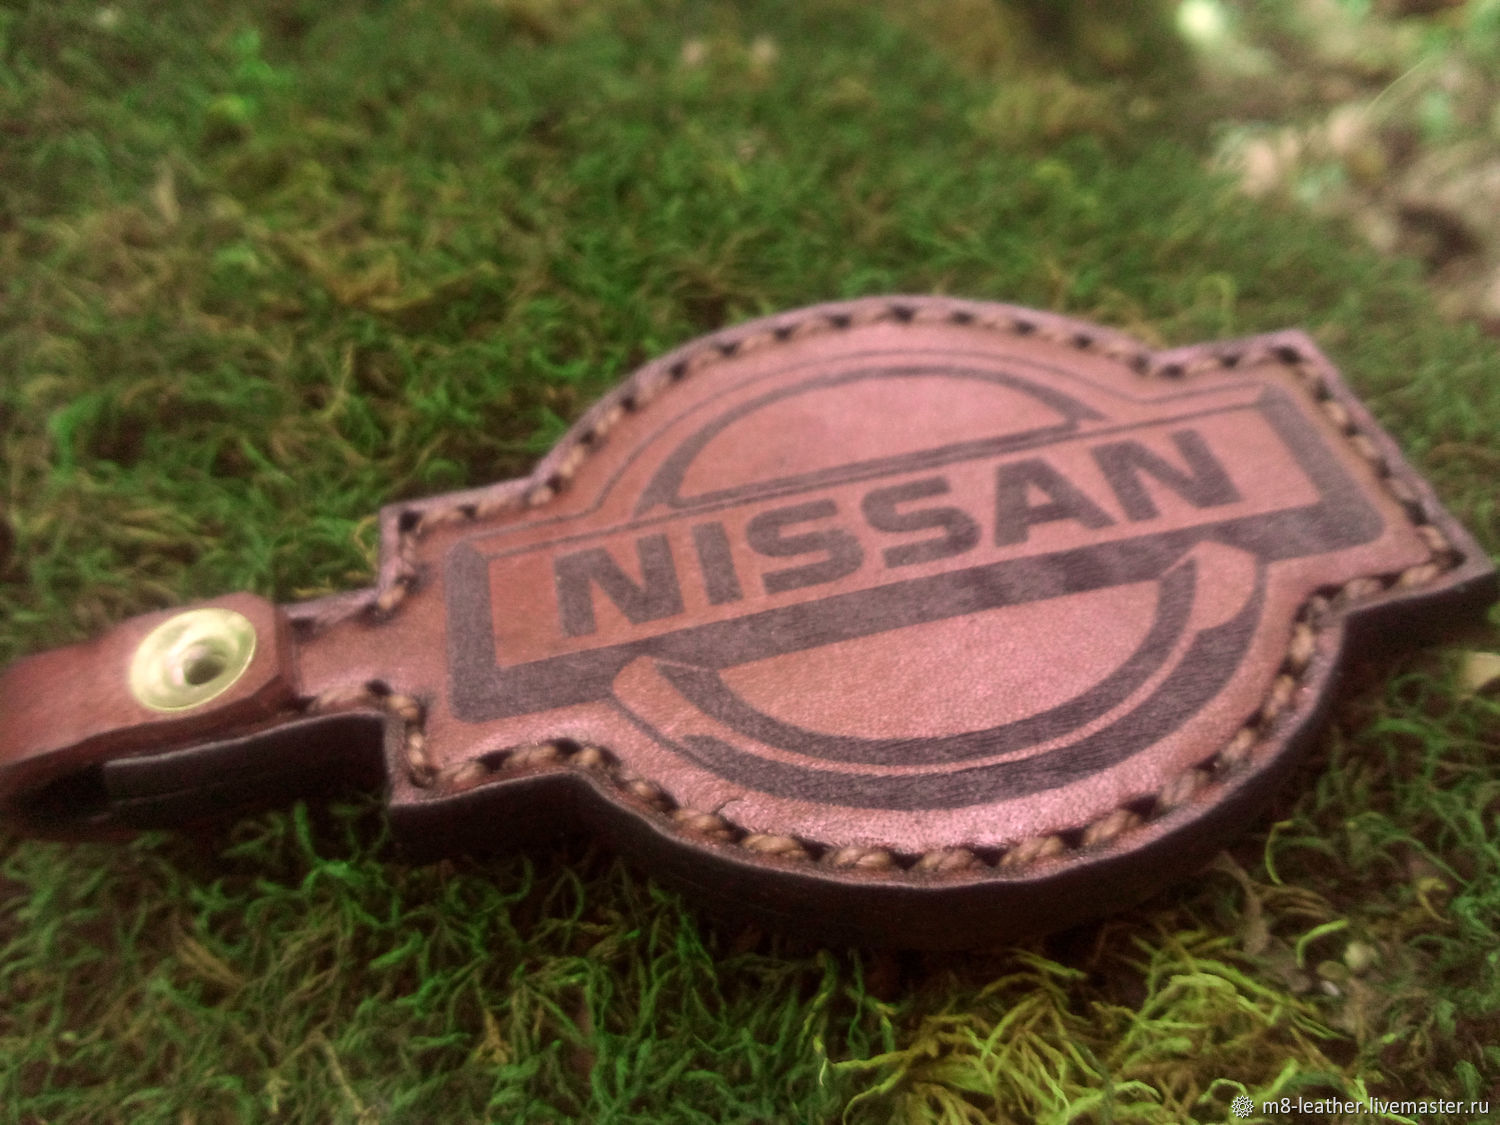 Брелок из кожи "Nissan"